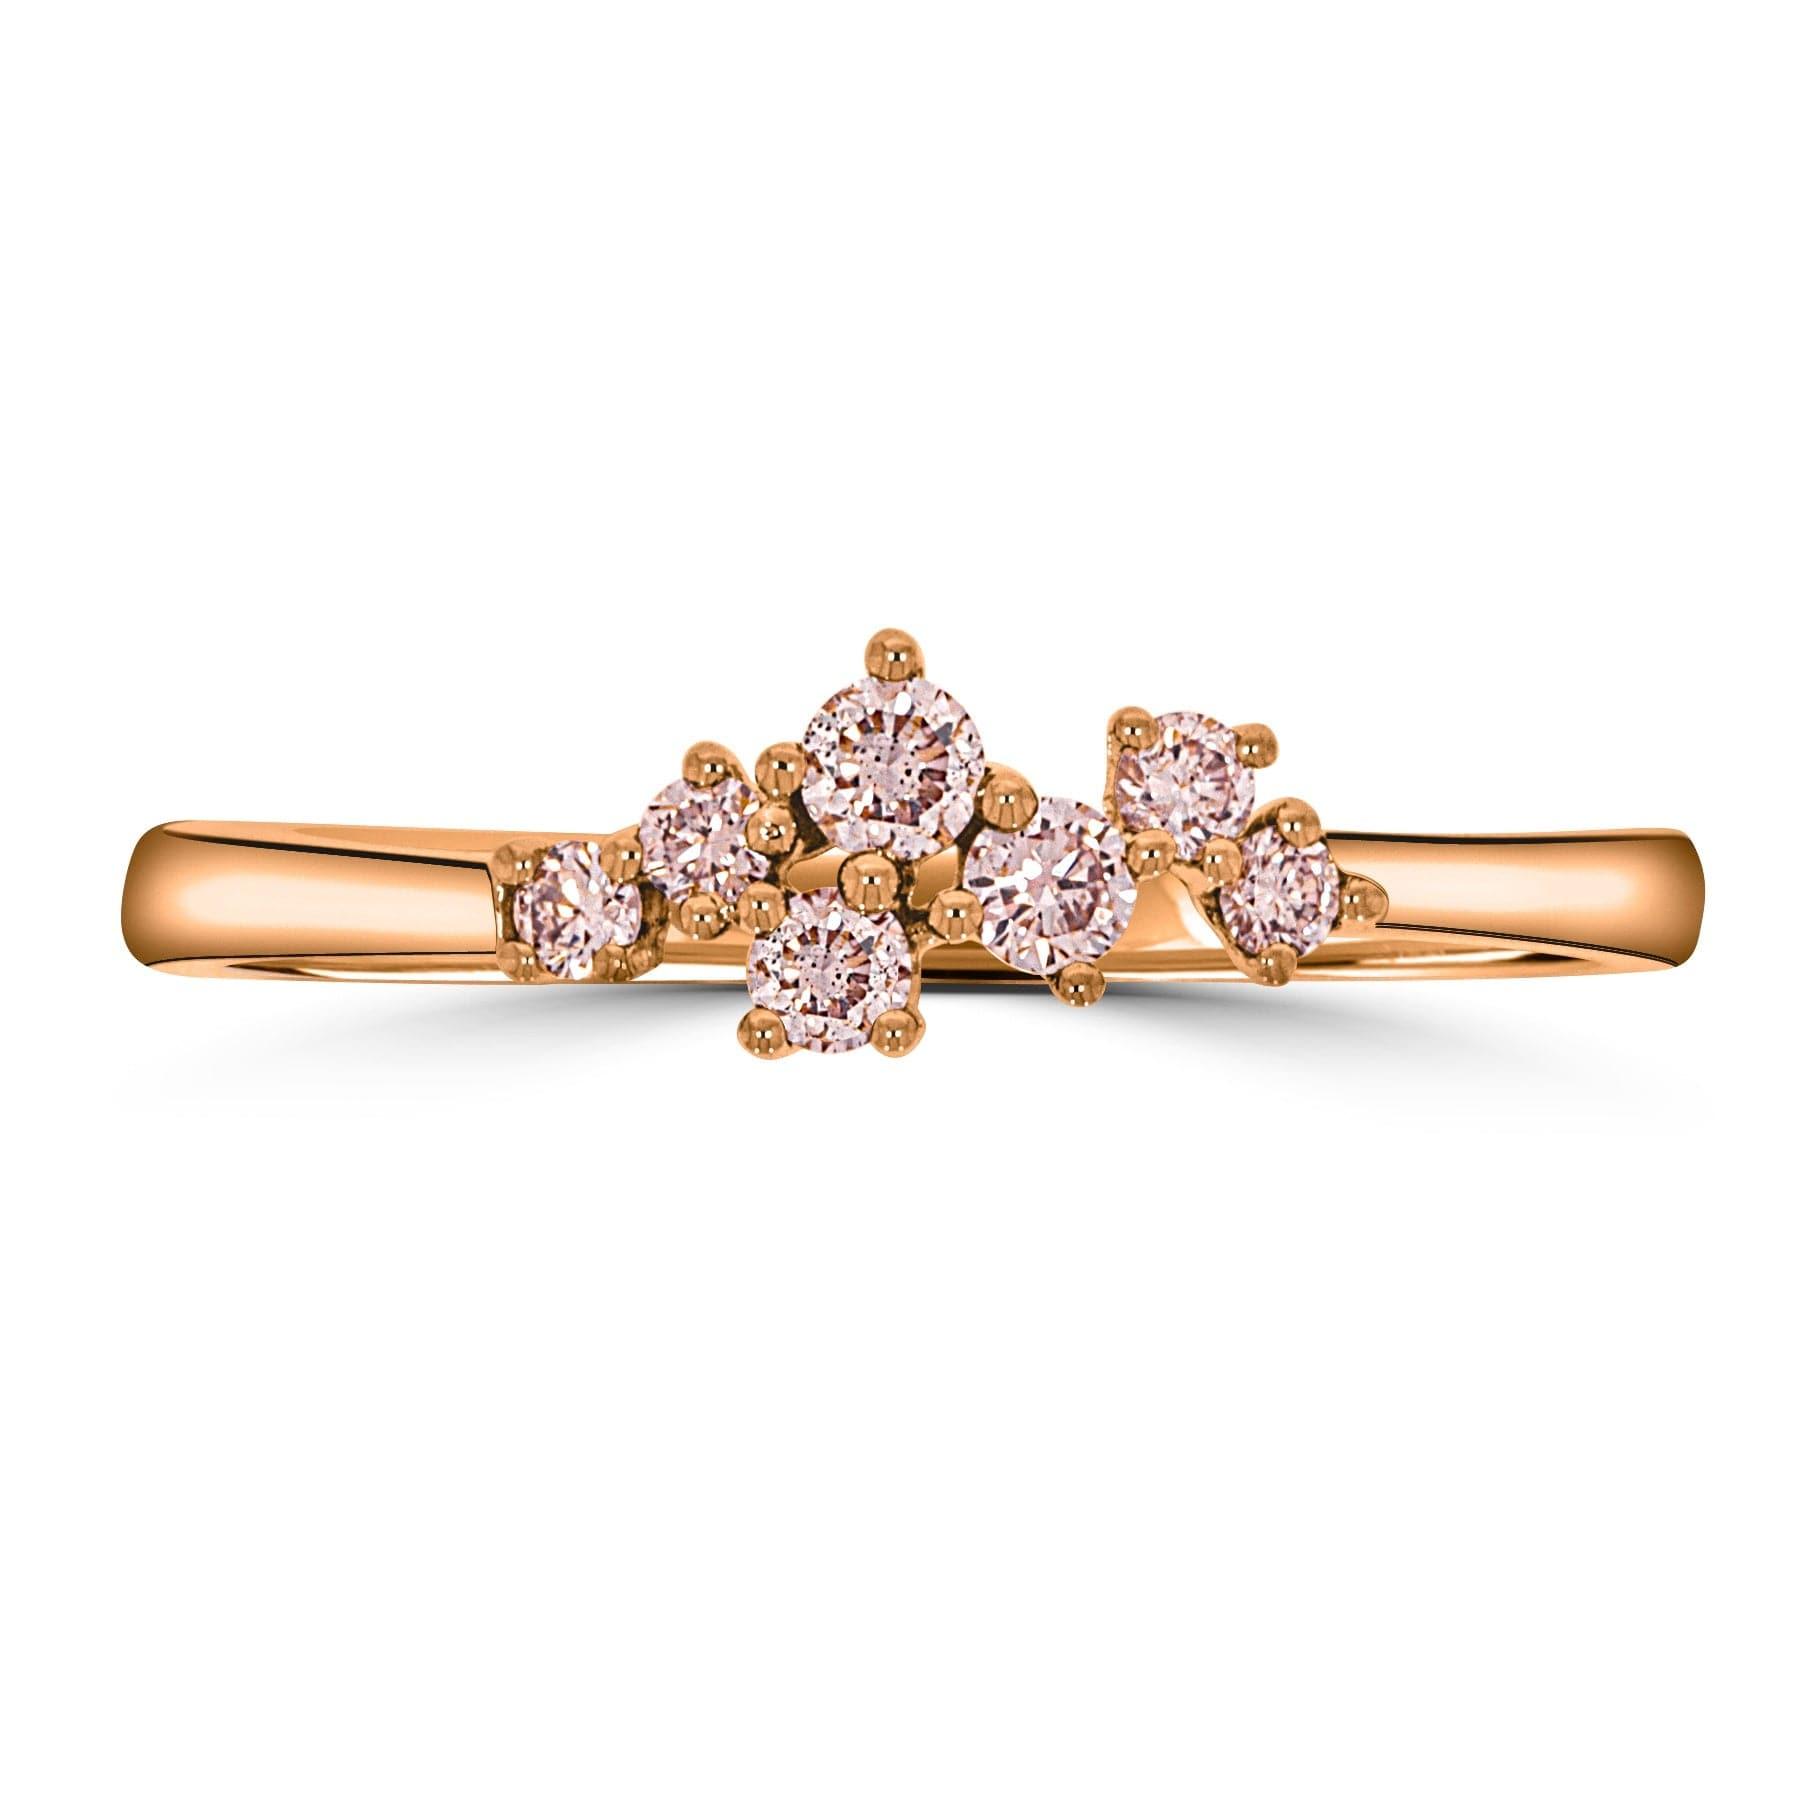 Eminence Pinks Scattered Diamond Ring RG - Rosendorff Diamond Jewellers